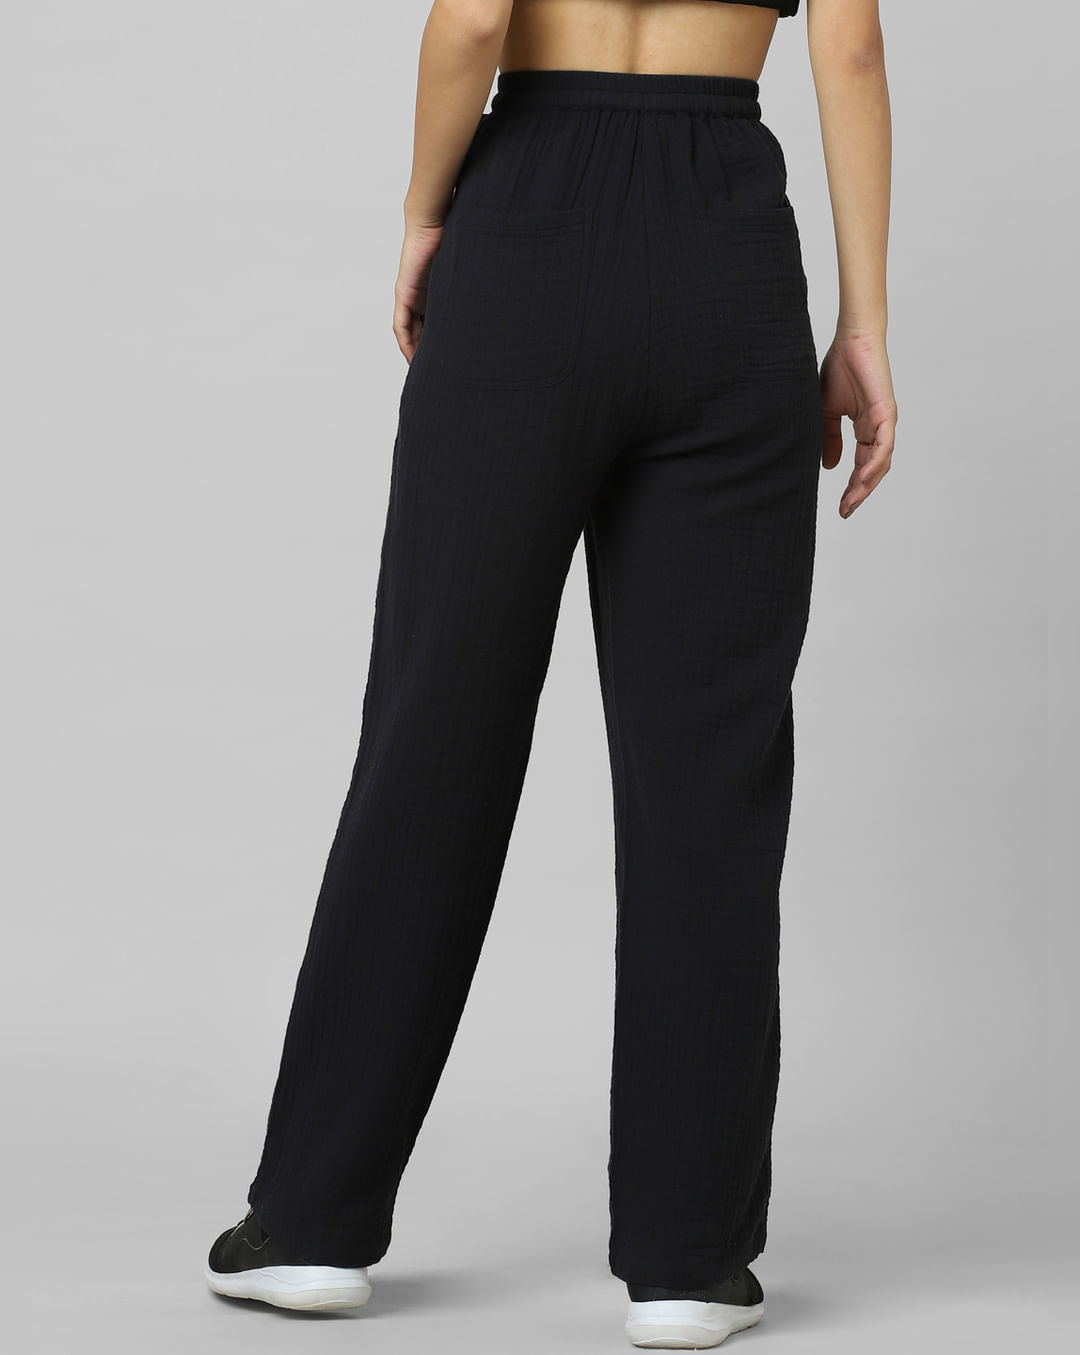 Women Hot Selling Black PU Lace Detail Loungewear Sweatsuit